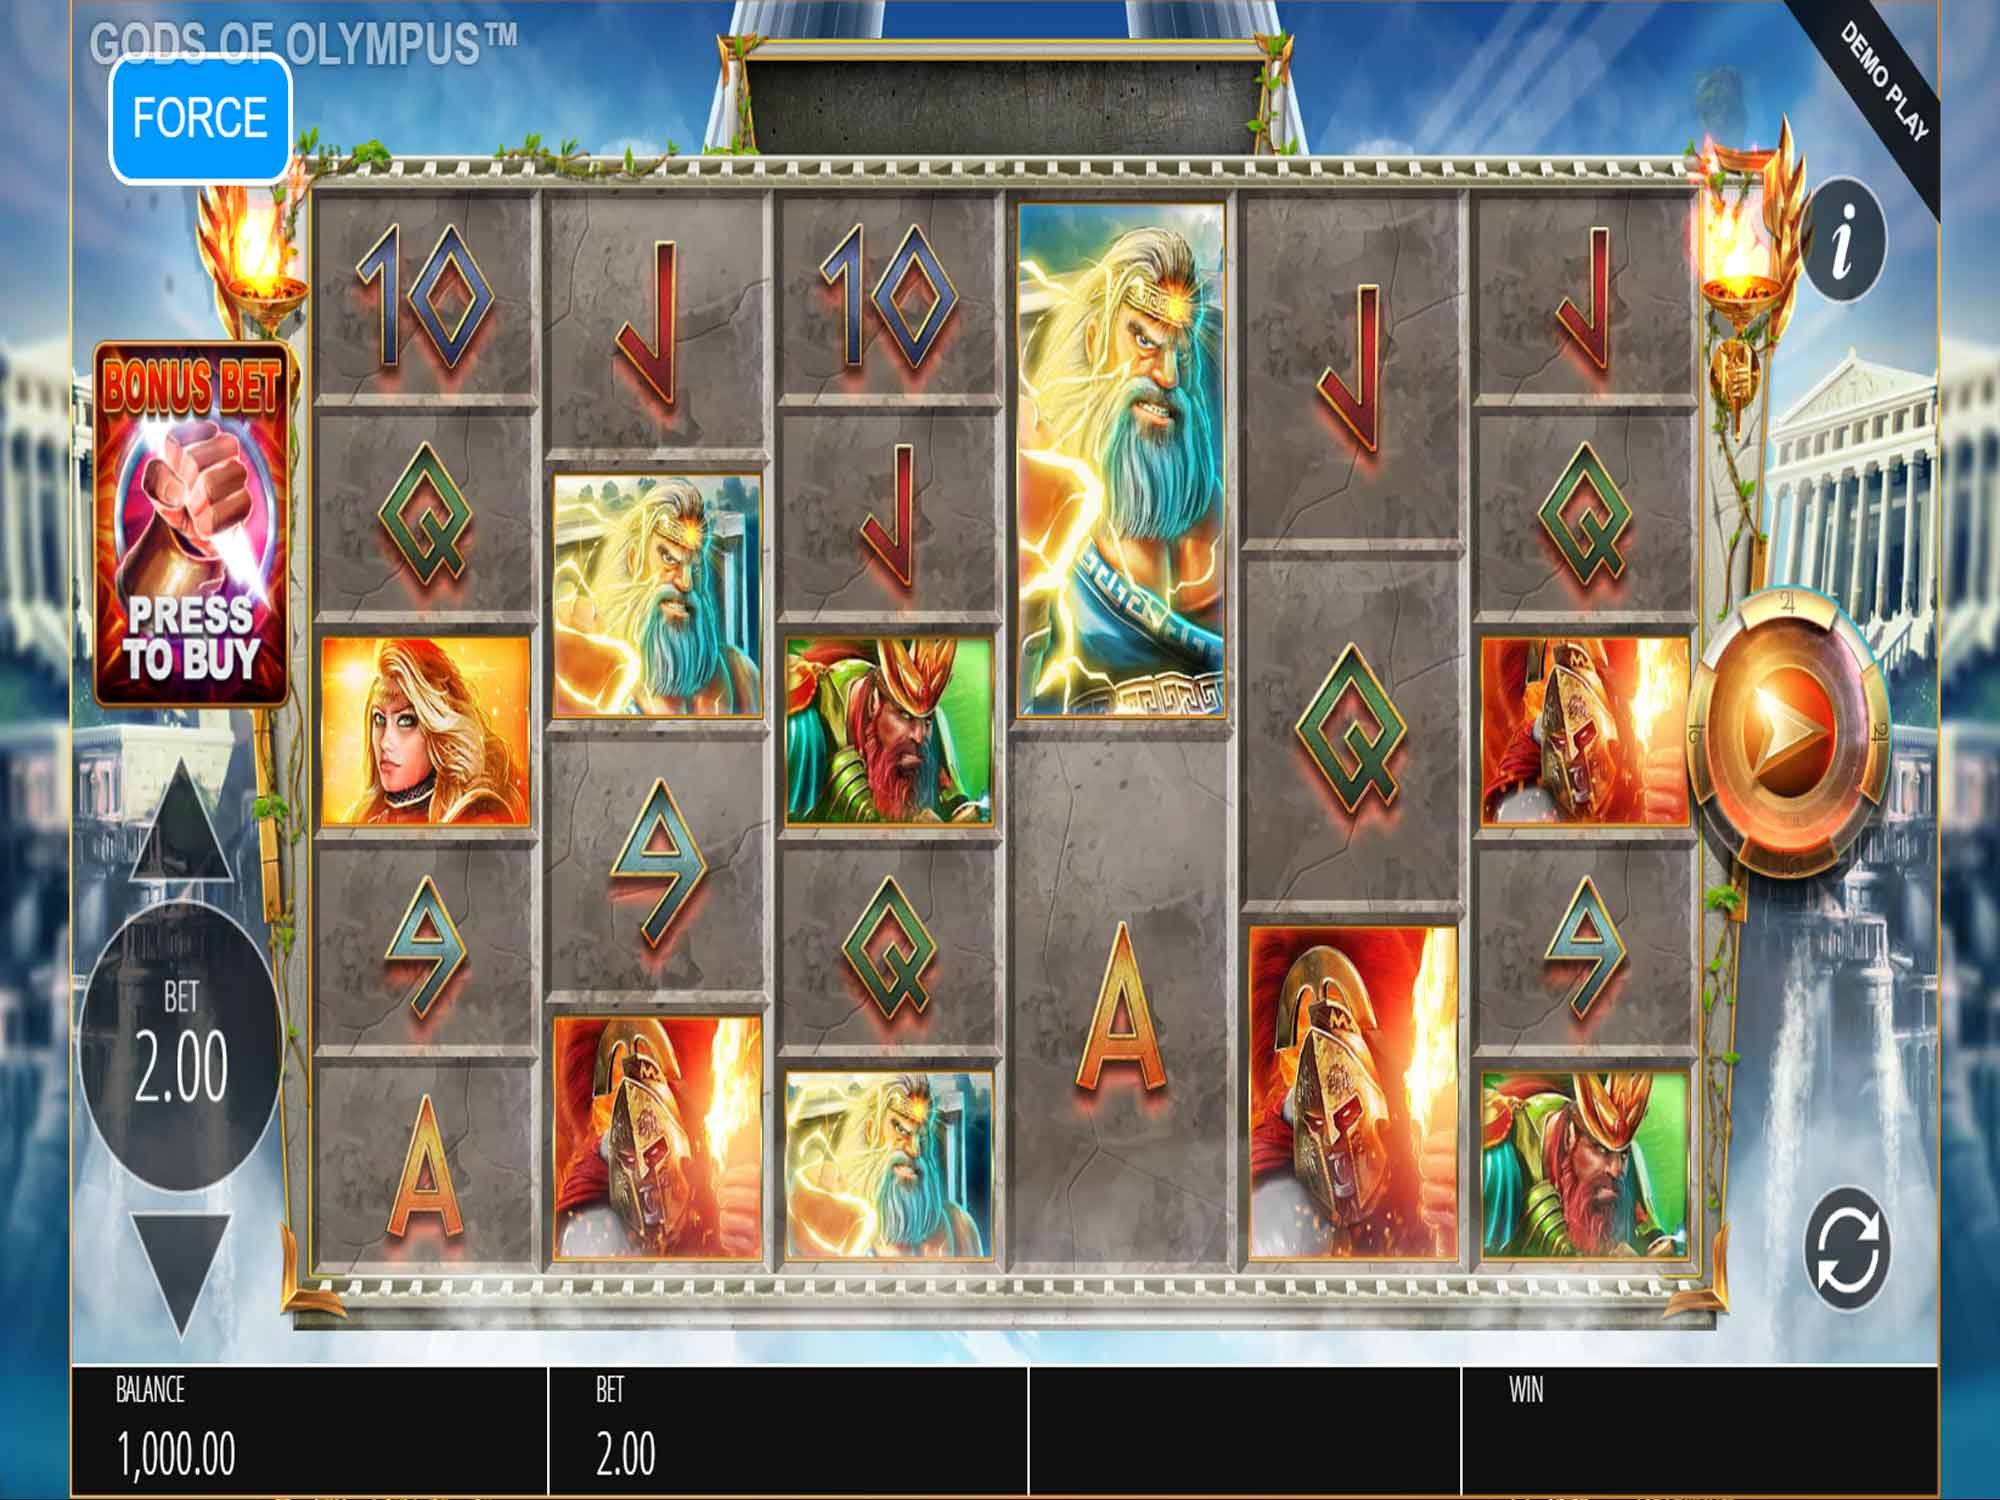 Gods of Olympus video slot game screenshot